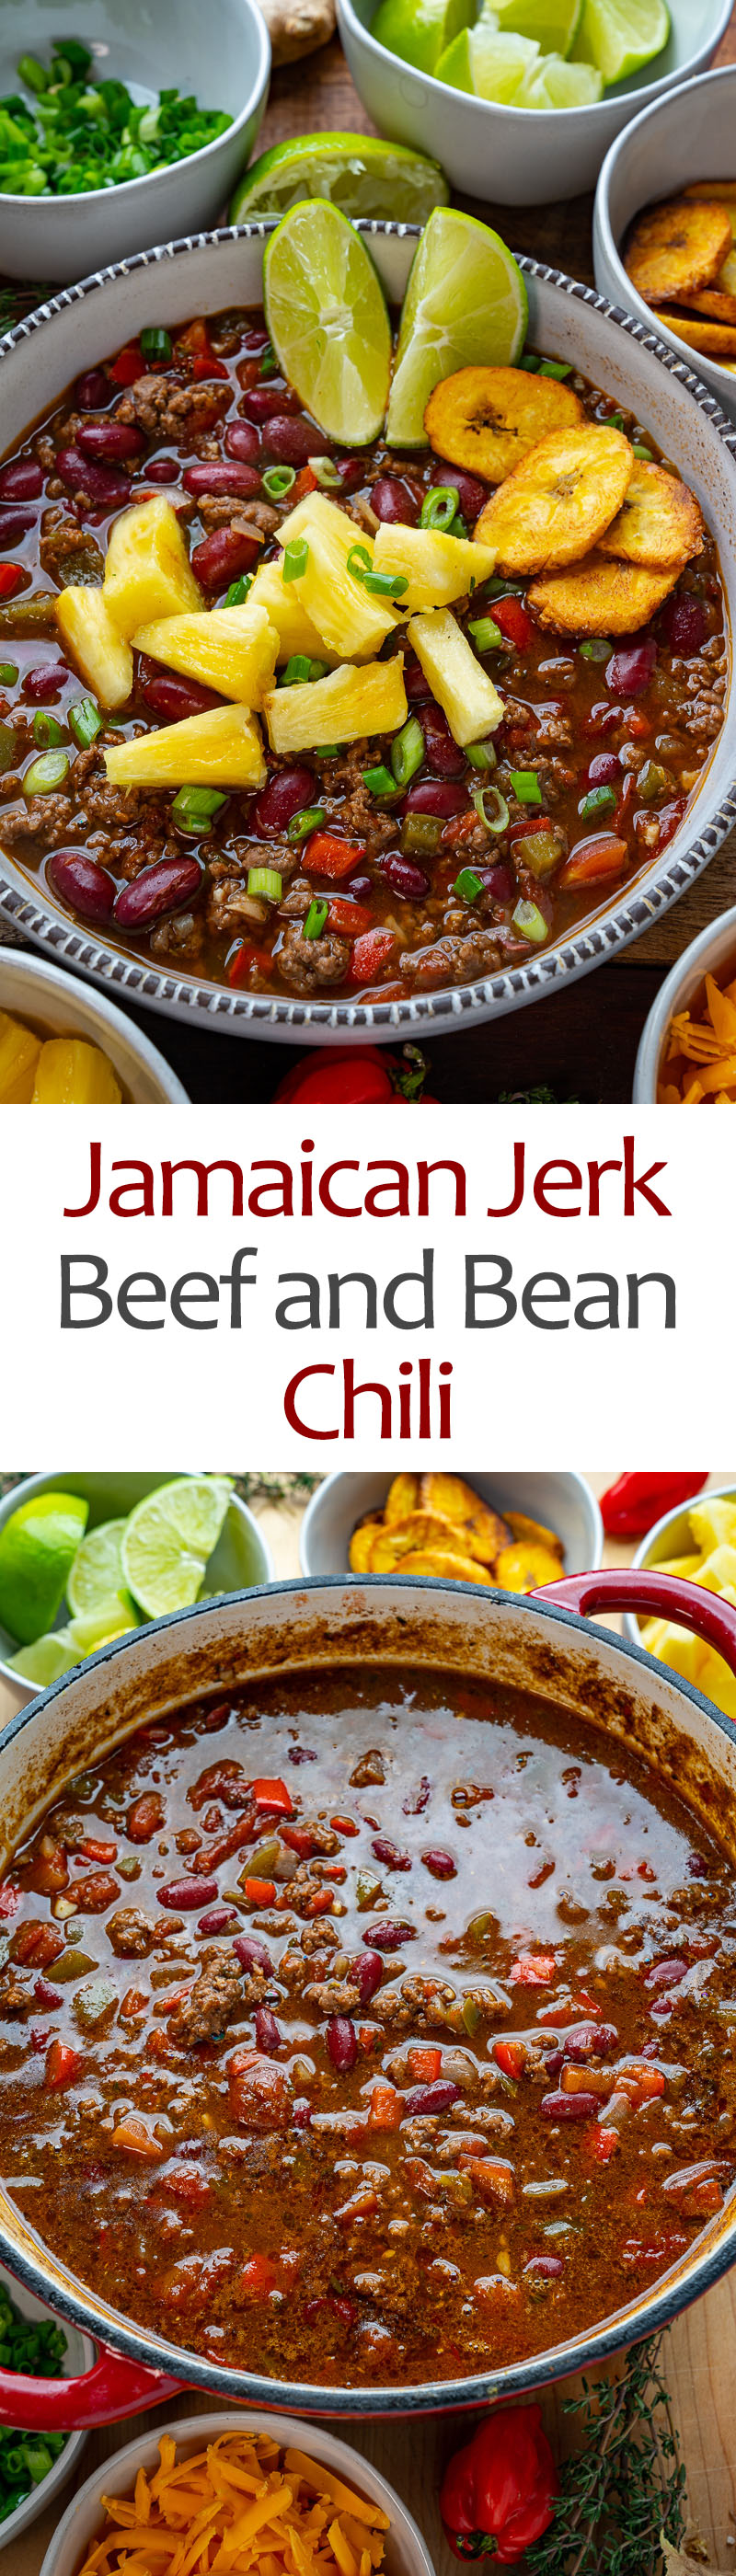 Jamaican Jerk Beef and Bean Chili